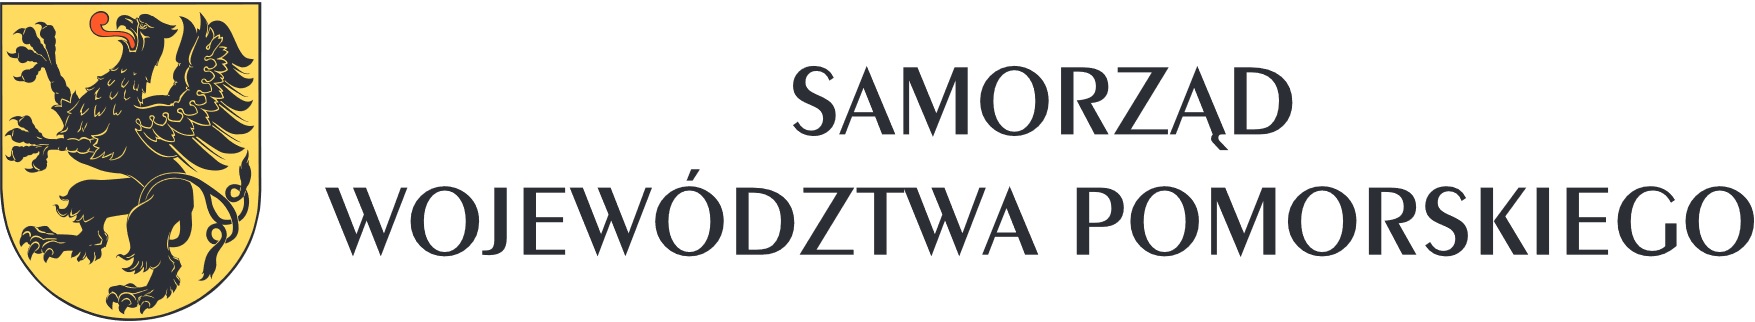 UMWP, logo